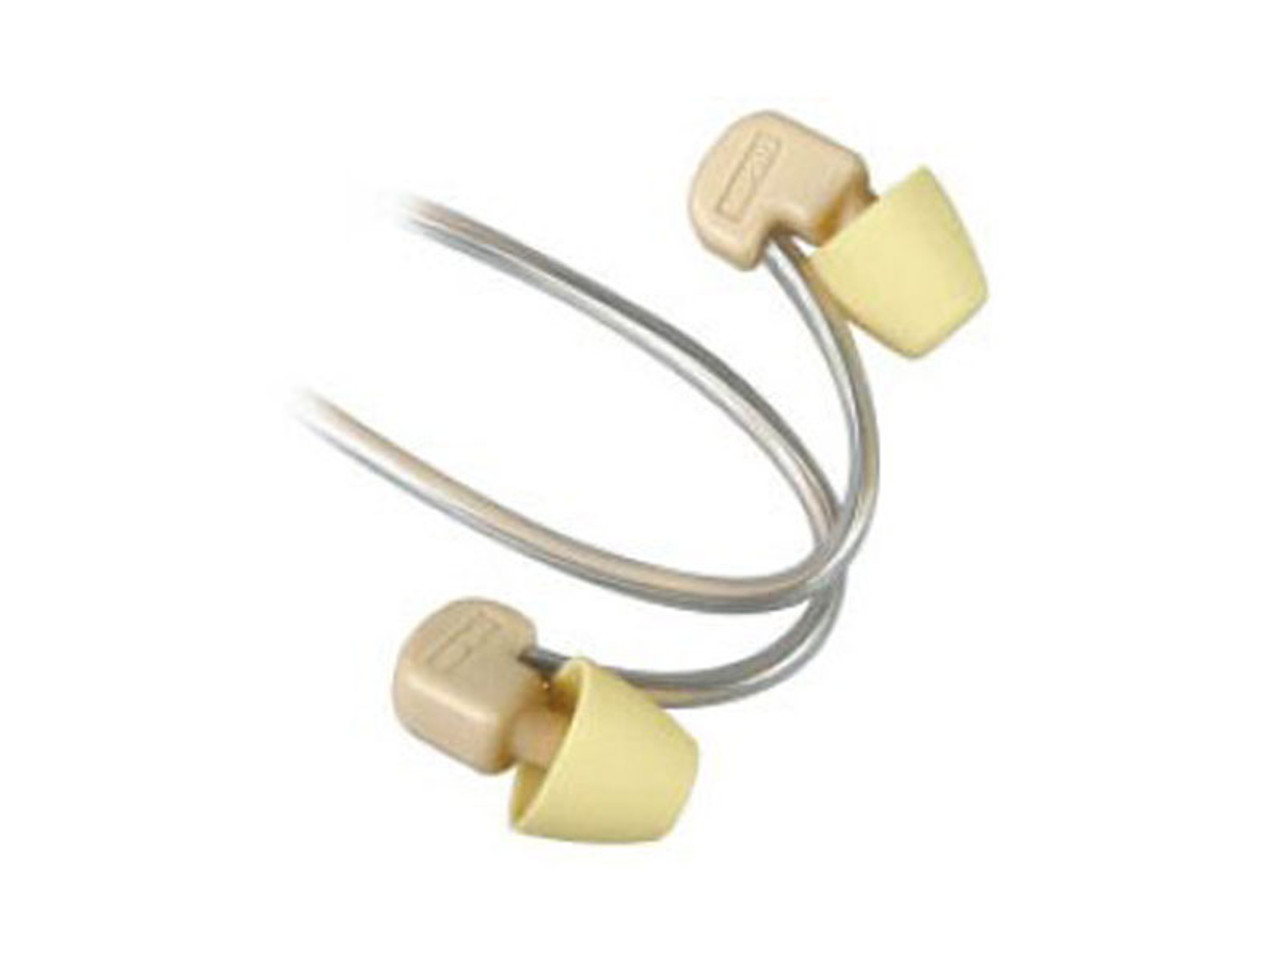 Avlex E8P Premium In-Ear Monitor Earbud